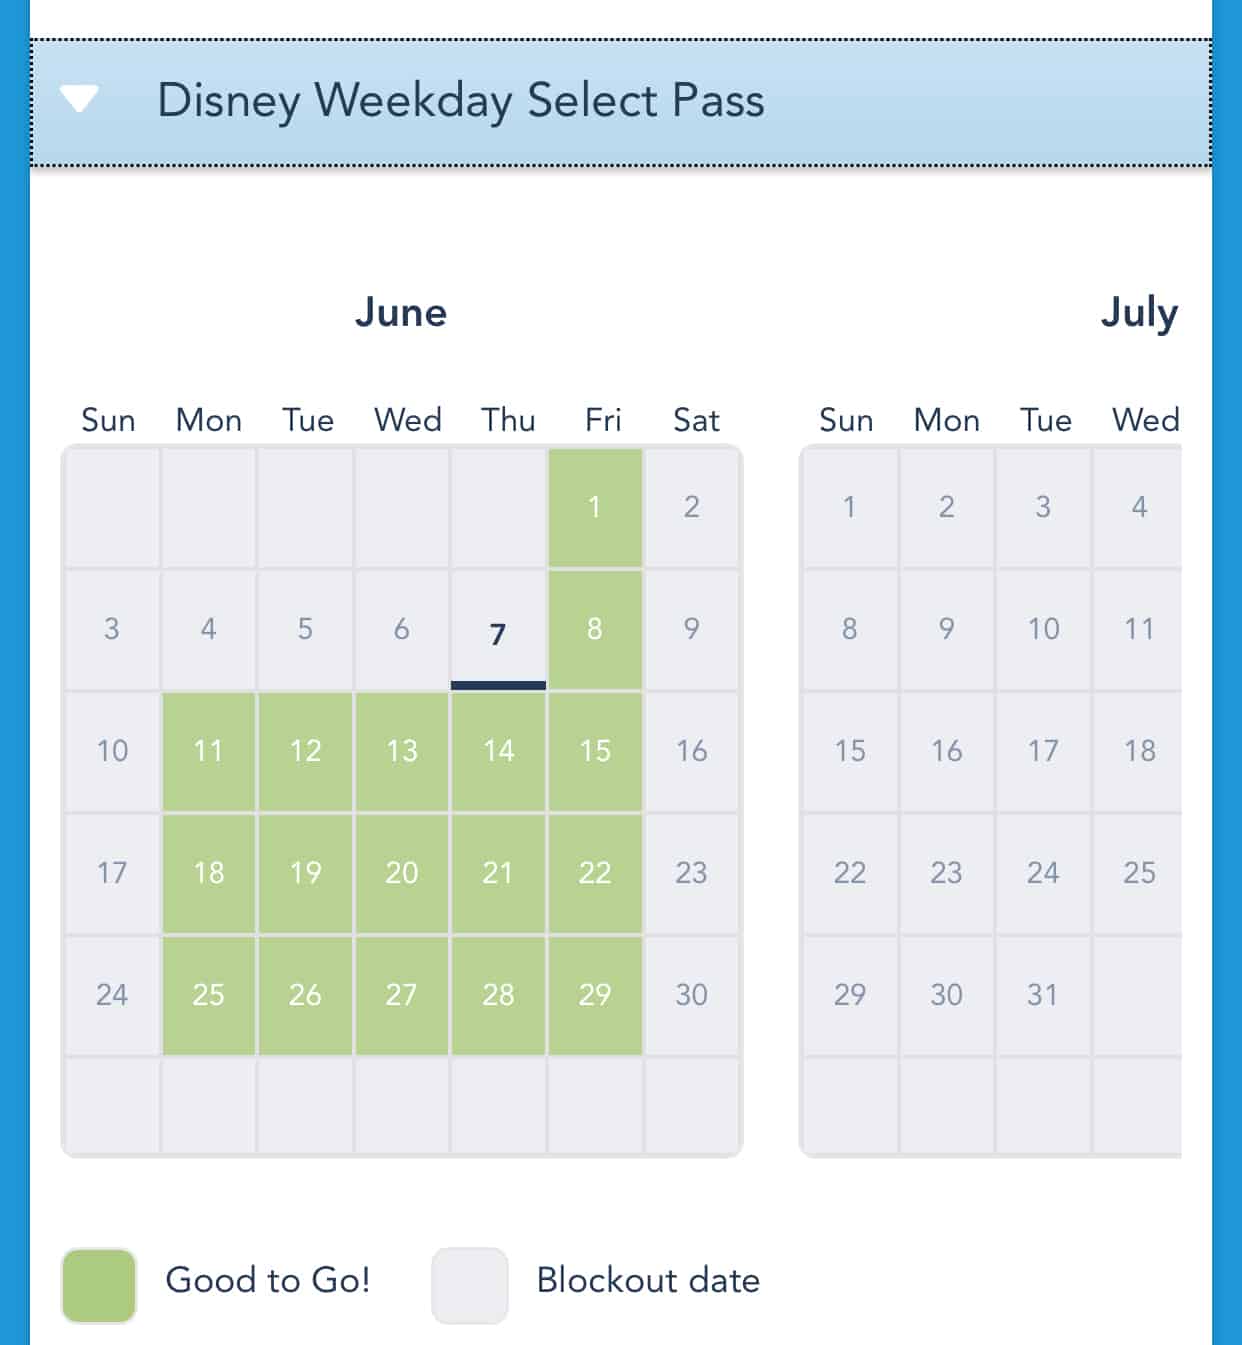 Disney Theme Park Select Annual Pass Blockout Dates Theme Image